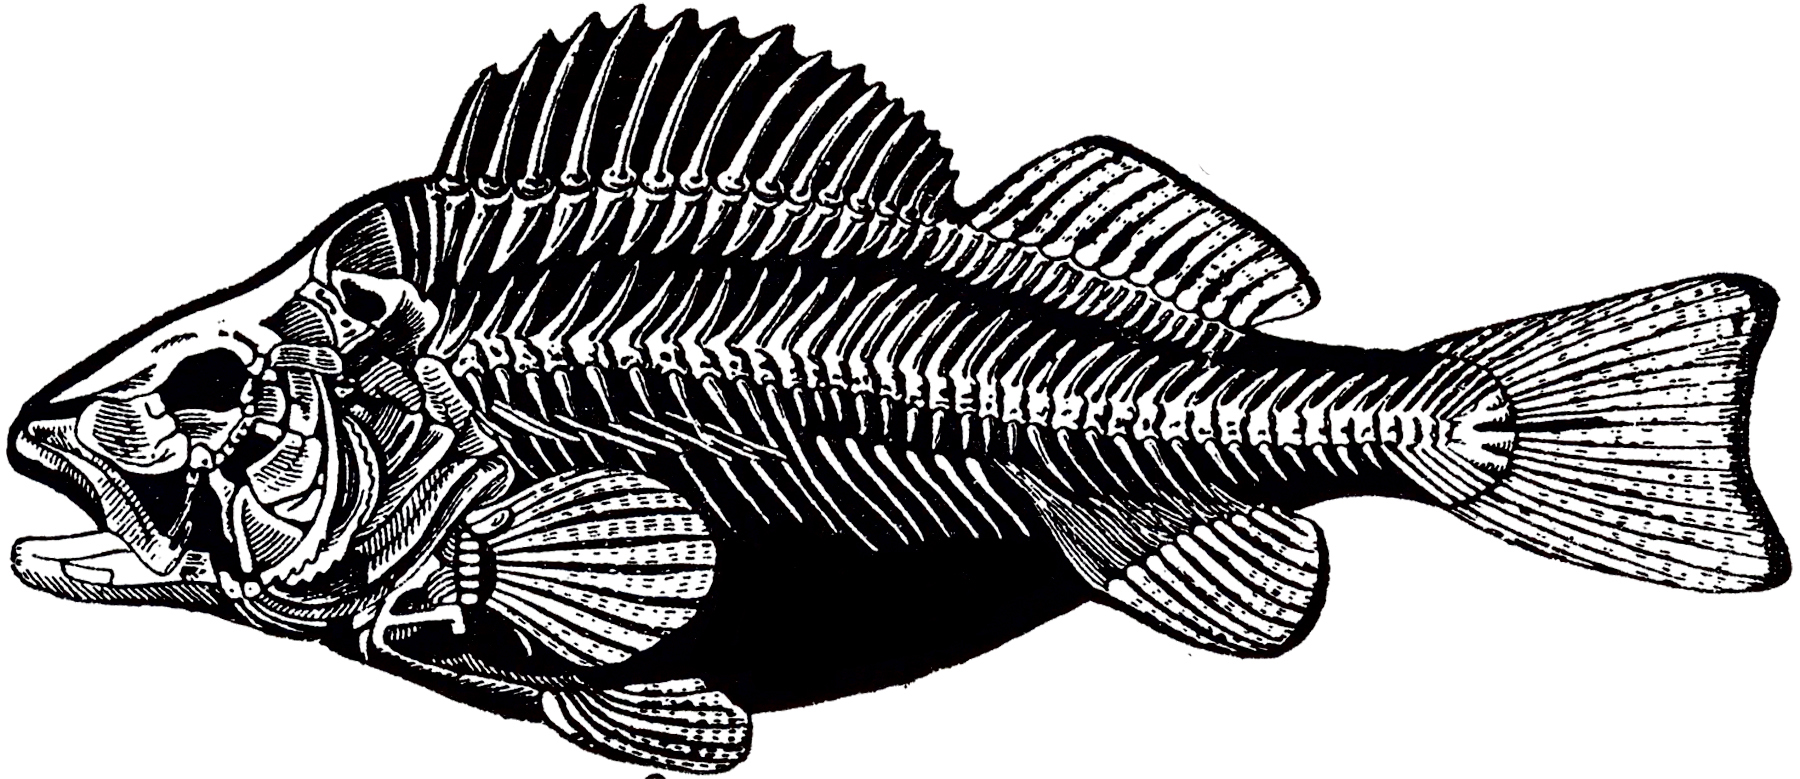 Vintage Fish Skeleton Image! - The Graphics Fairy